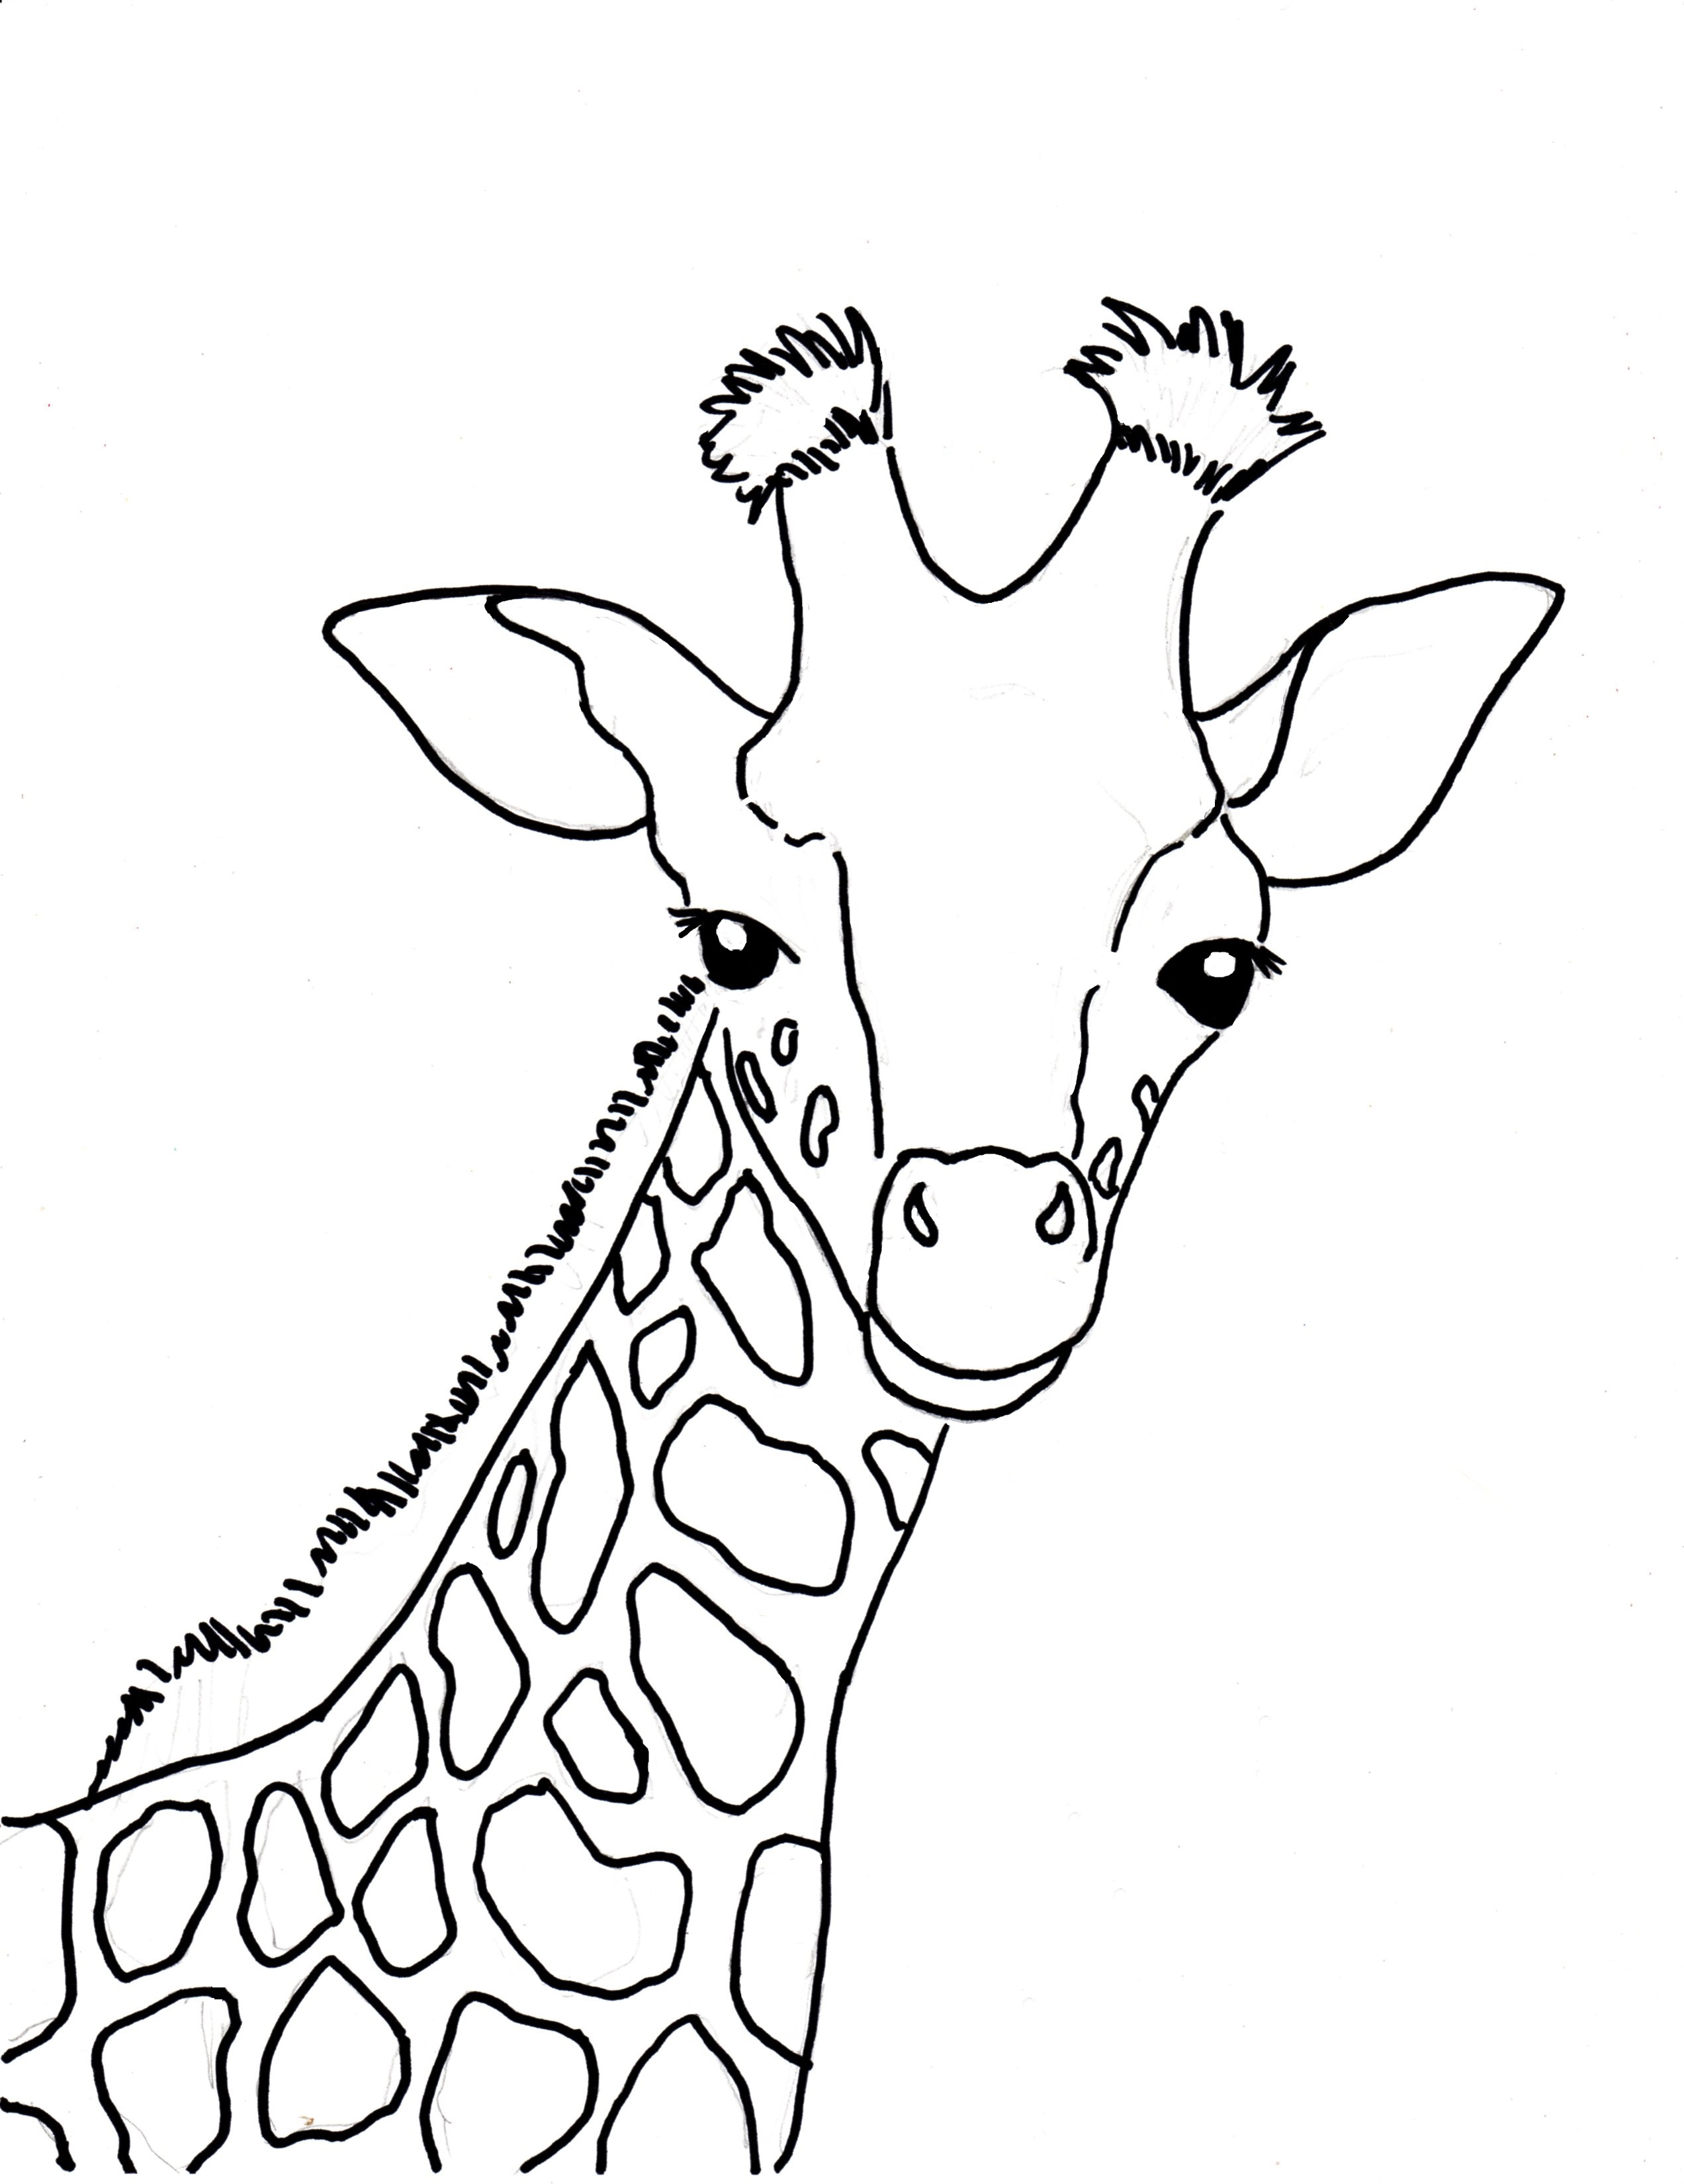 Baby Giraffe Coloring Page - Art Starts